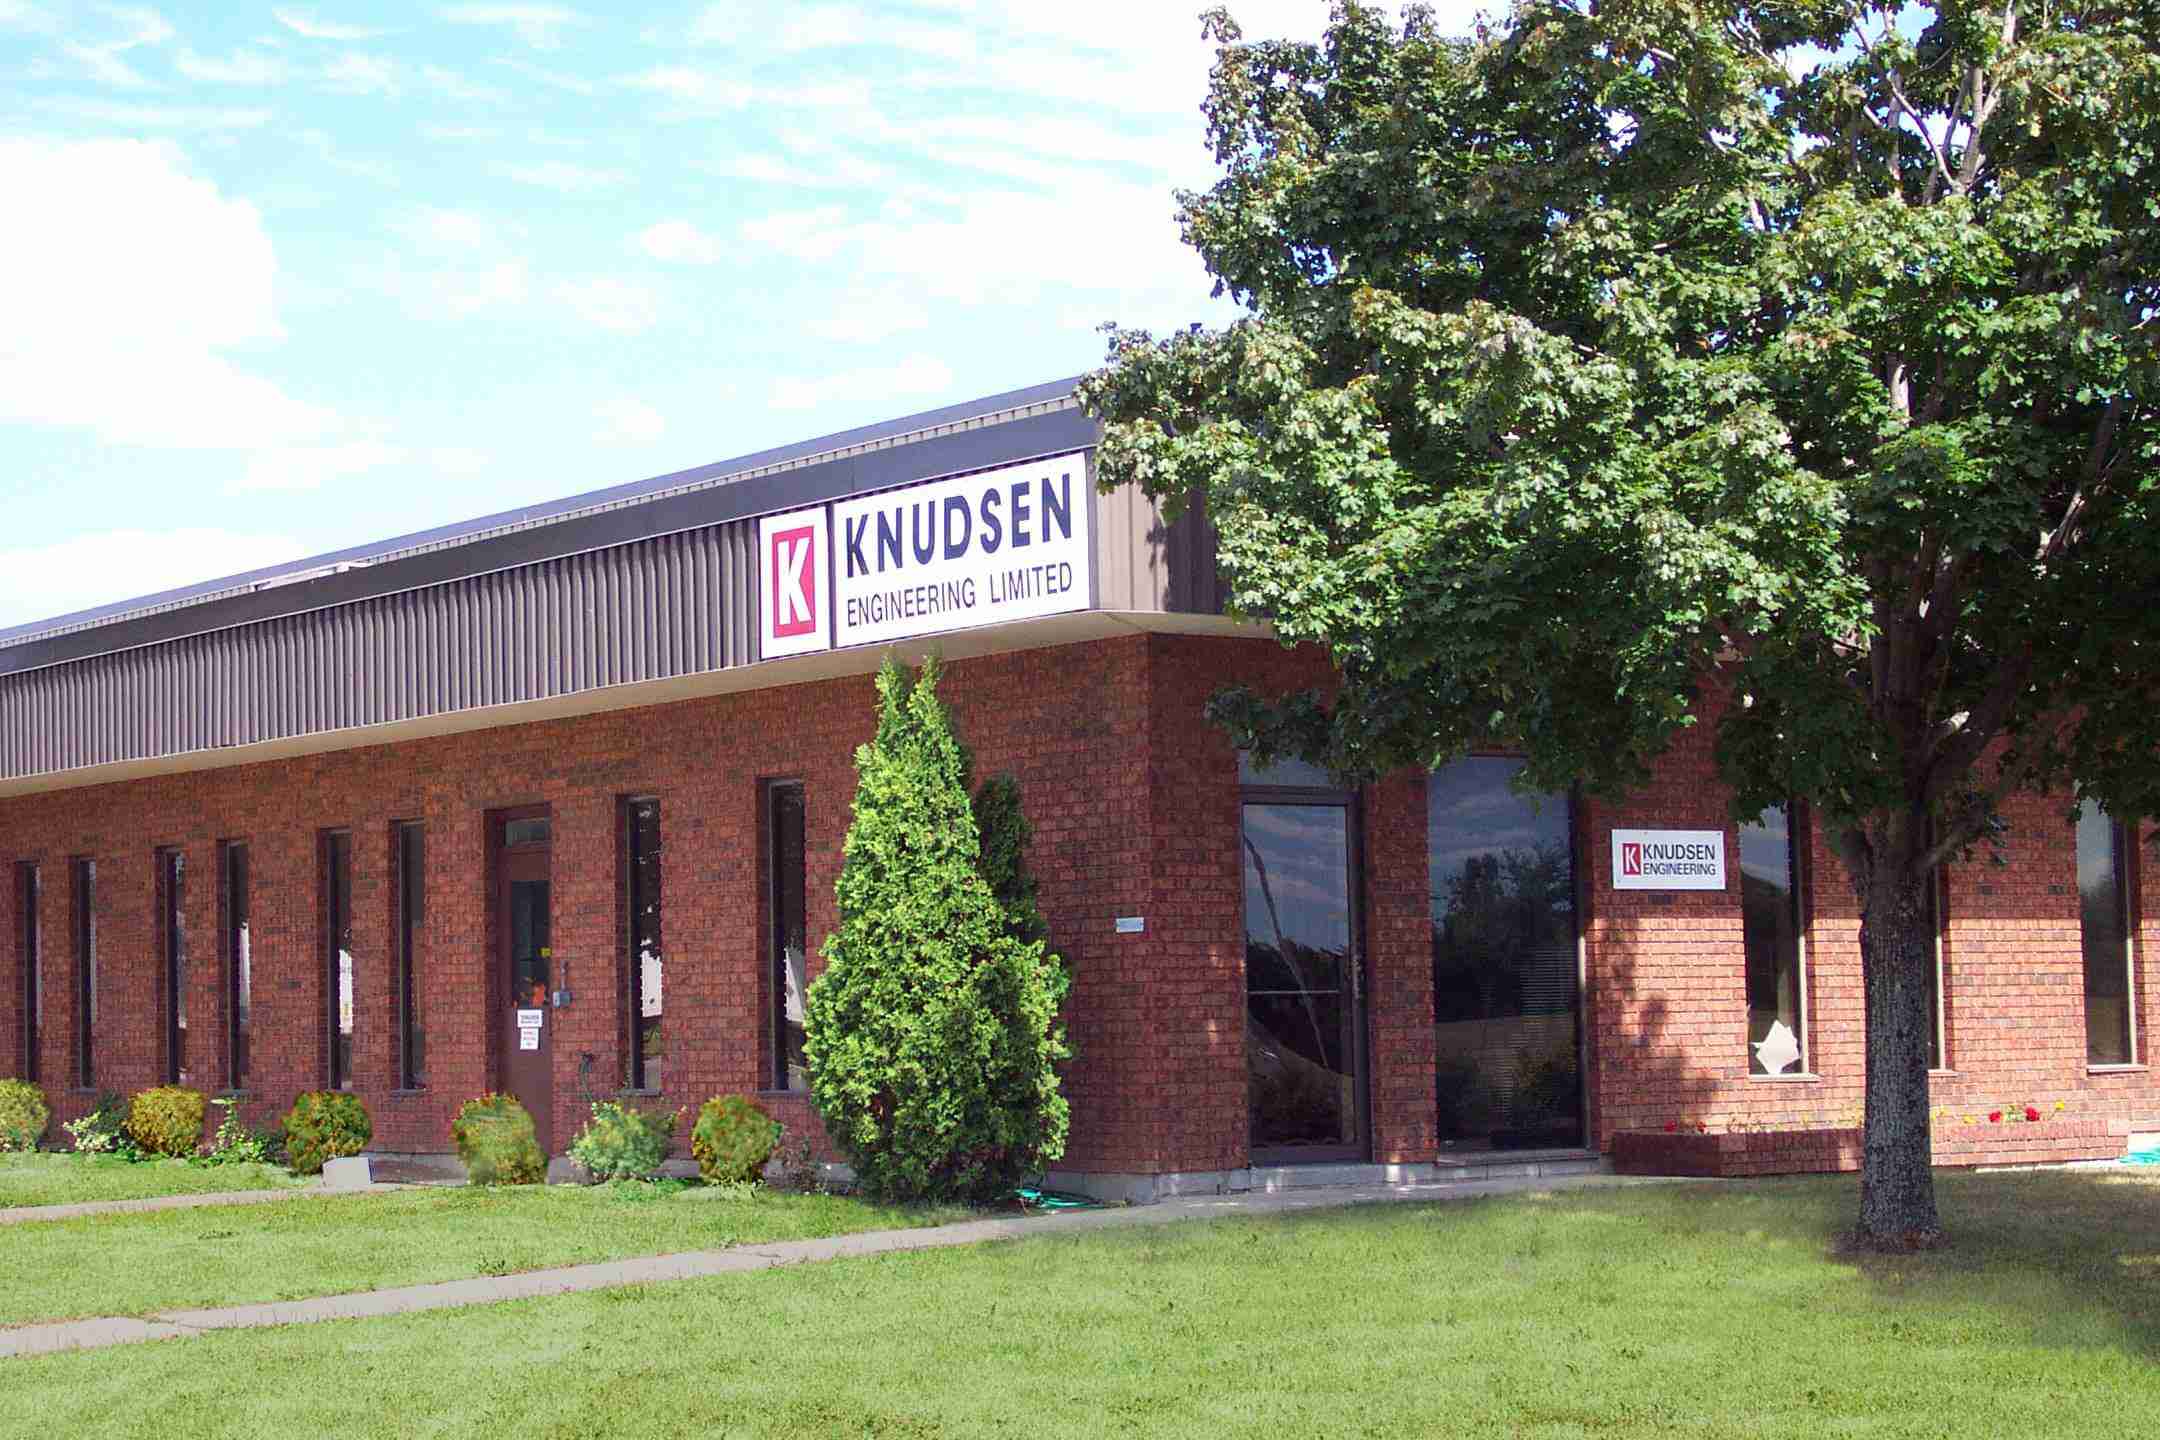 The KNUDSEN Building in Perth, Ontario